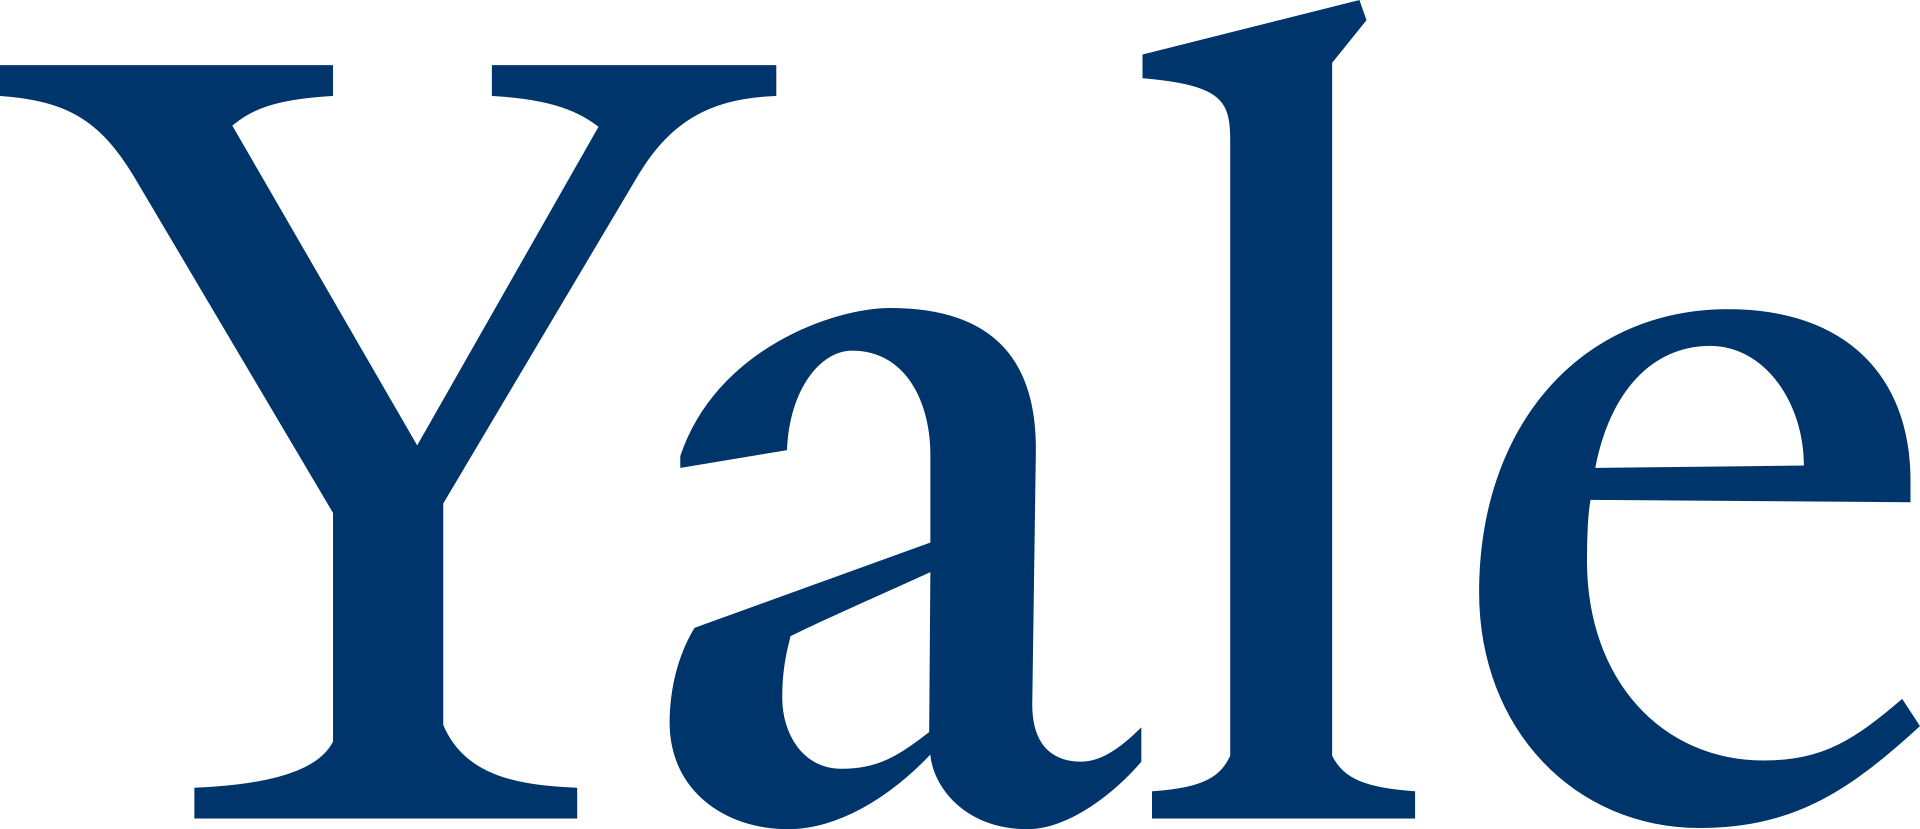 耶鲁大学 logo, By 耶鲁大学 - http://身份.耶鲁大学.edu/耶鲁大学-logo-wordmarks, 公共领域, http://commons.维基.org/w/index.php?curid = 37348190 "